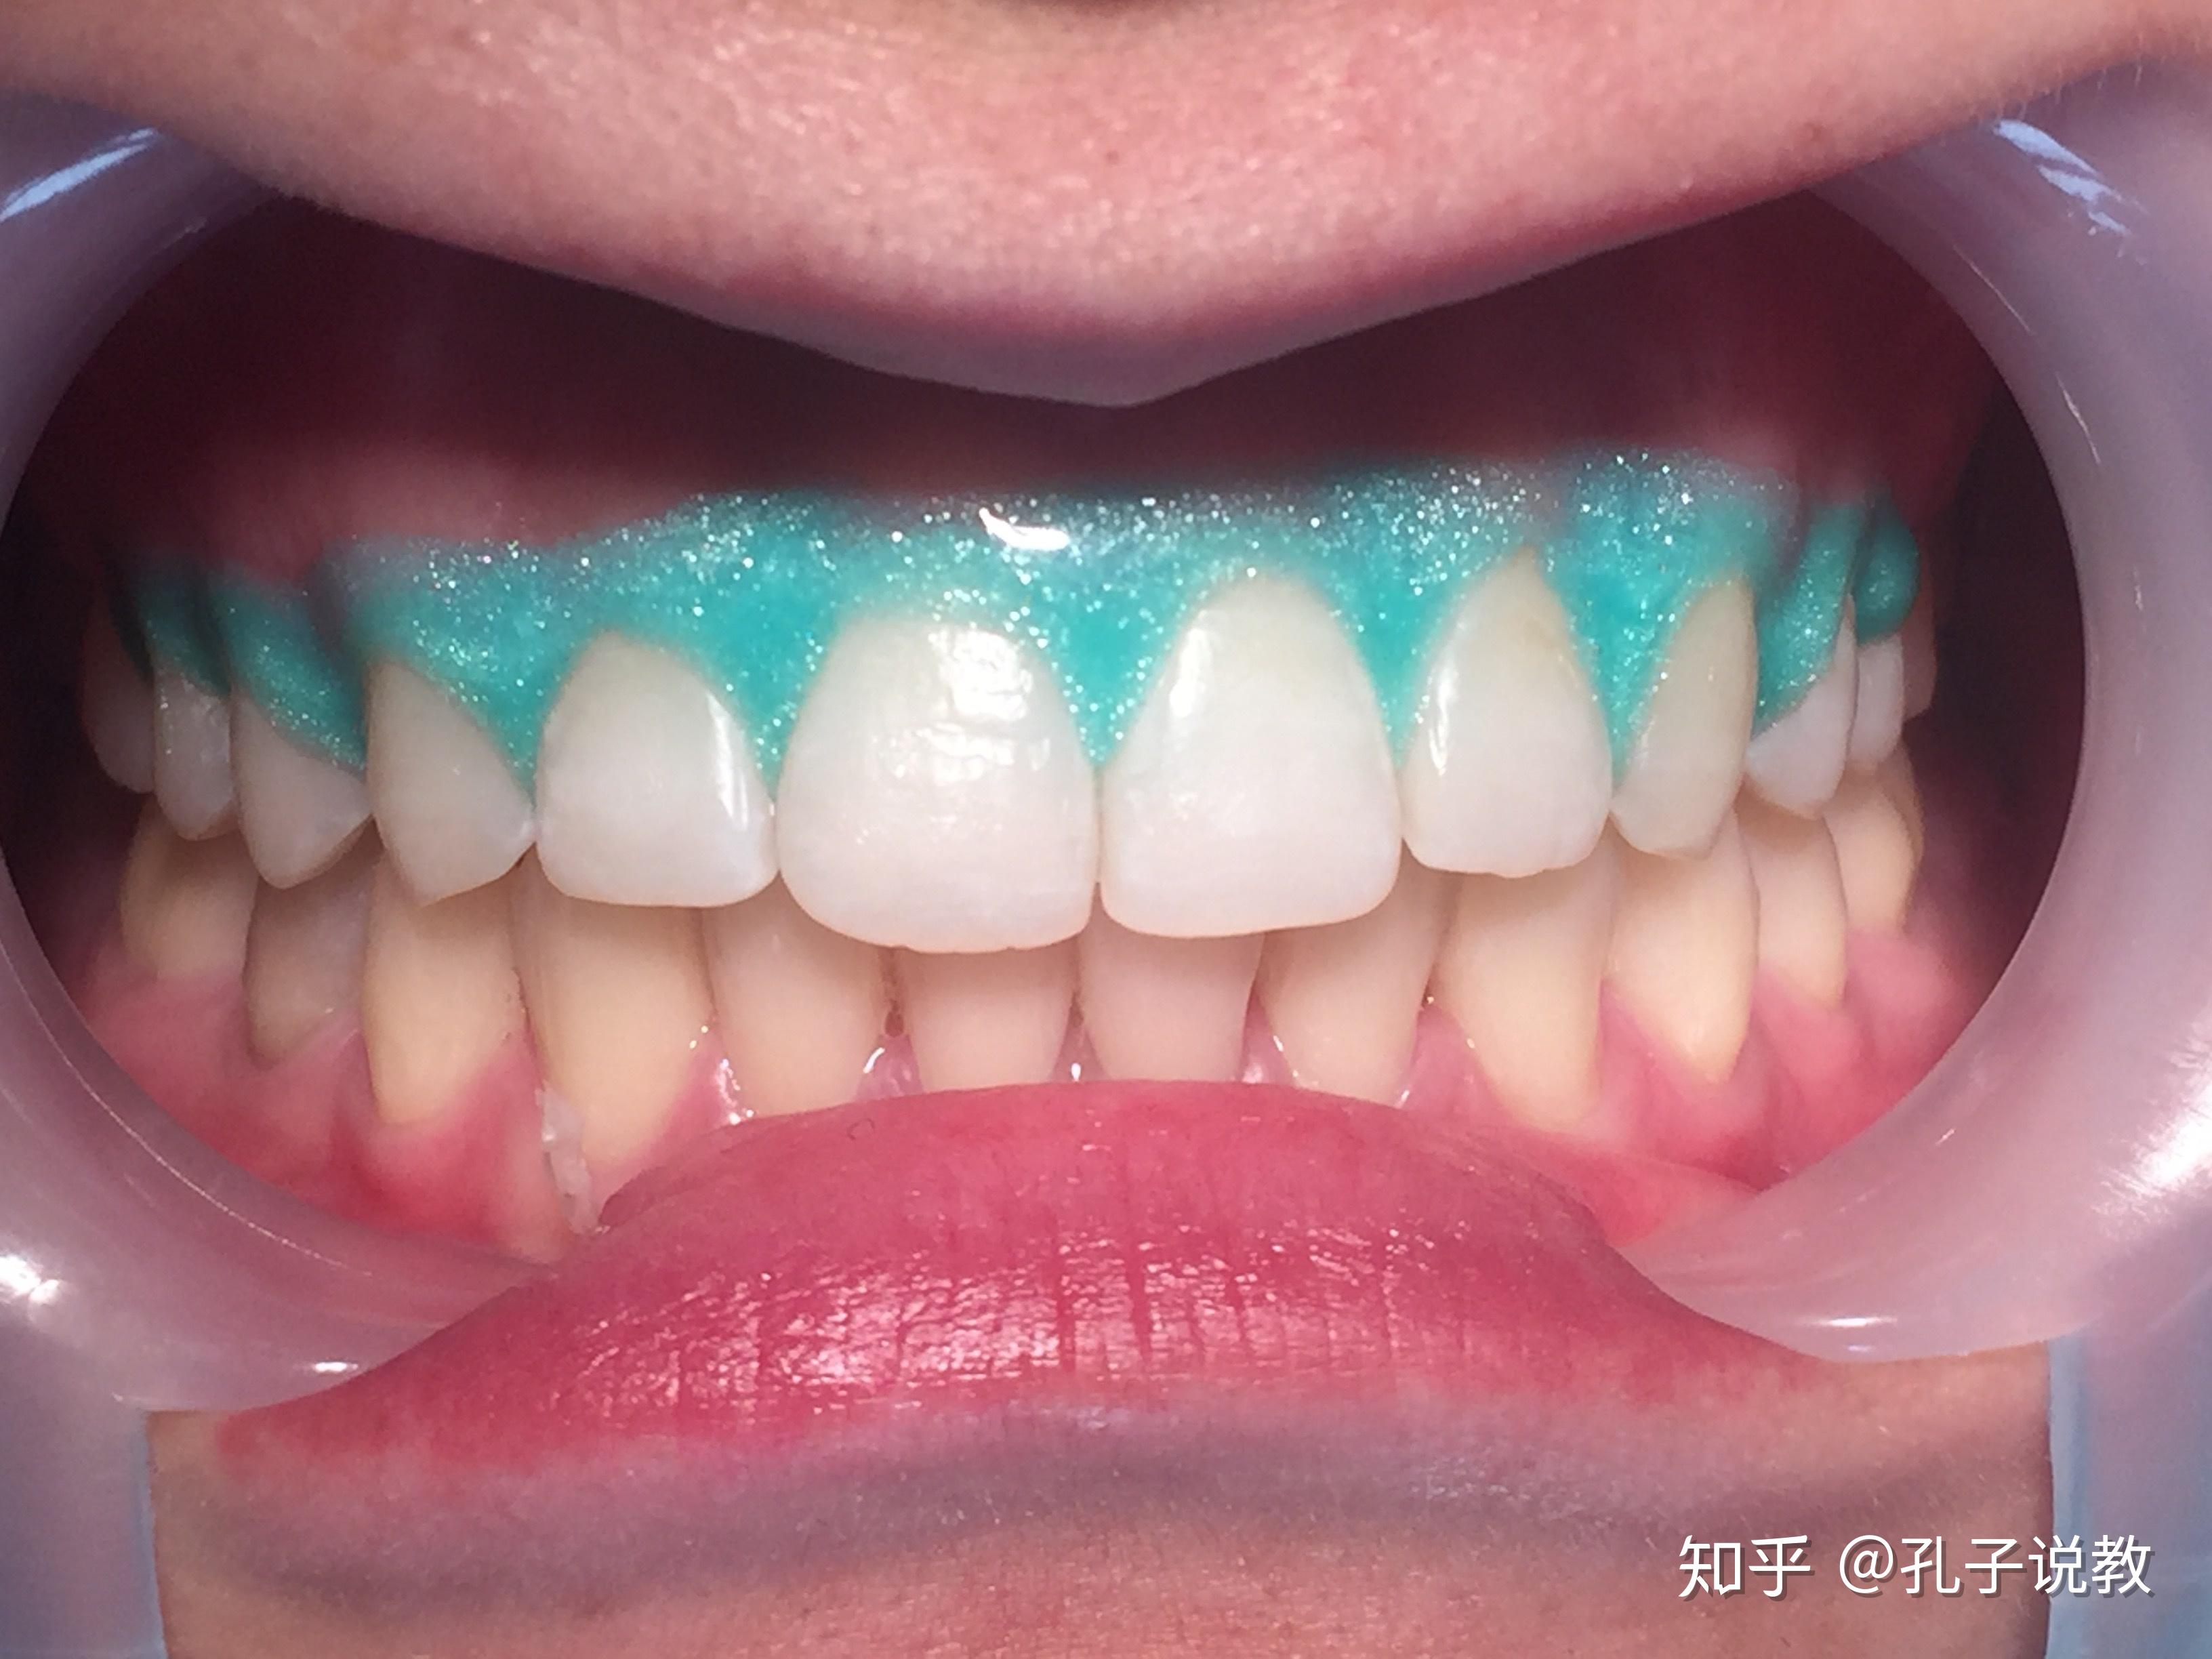 Teeth Whitening | Herndon VA | Cosmetic Dentistry | Philips Zoom!